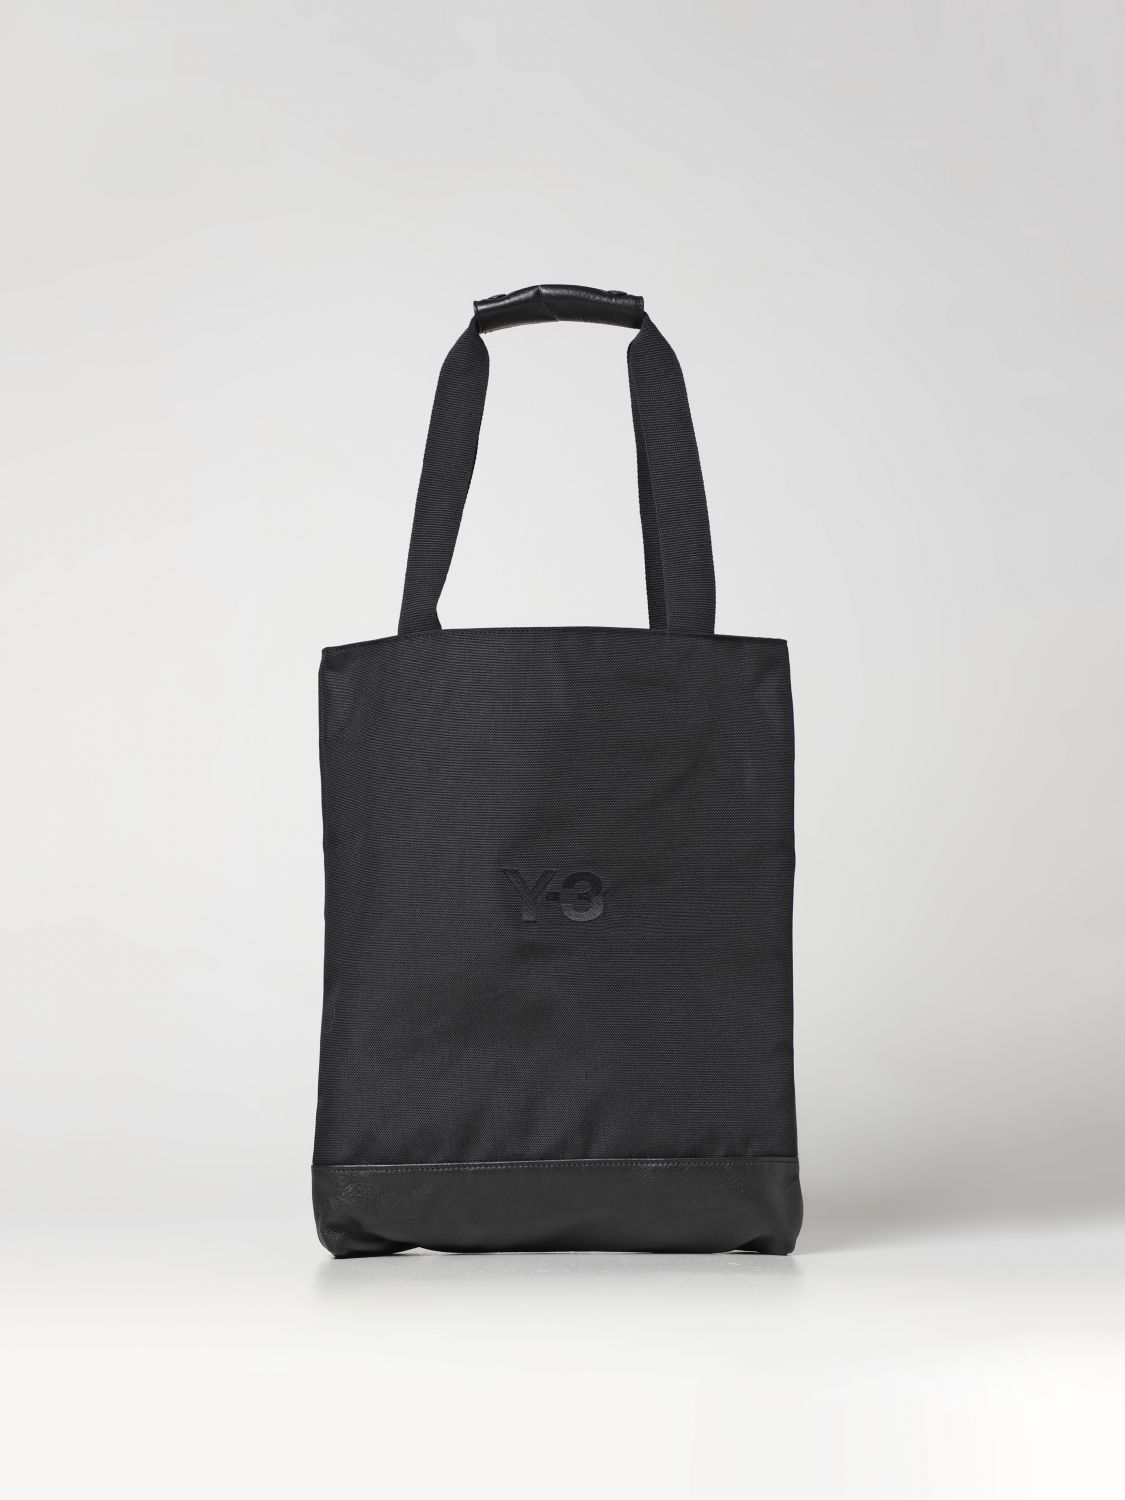 Y3 bags for man Black Y3 bags HM8366 online on